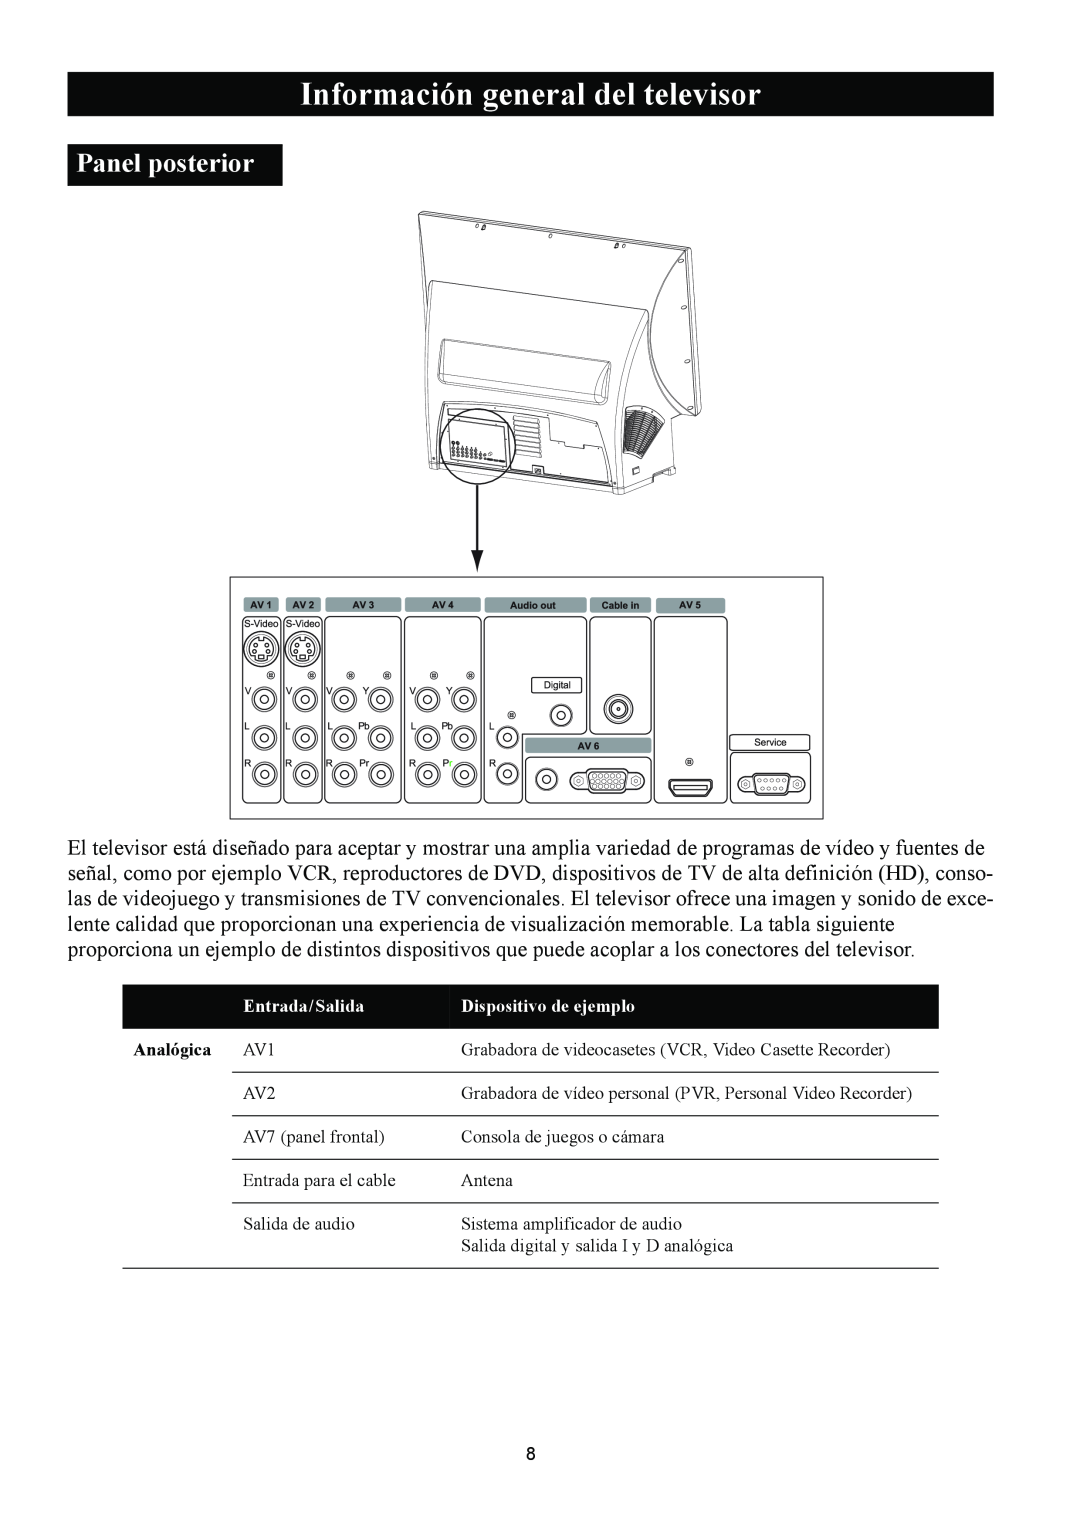 Magnavox 50ML8105D/17 owner manual Panel posterior, Información general del televisor, Analógica 